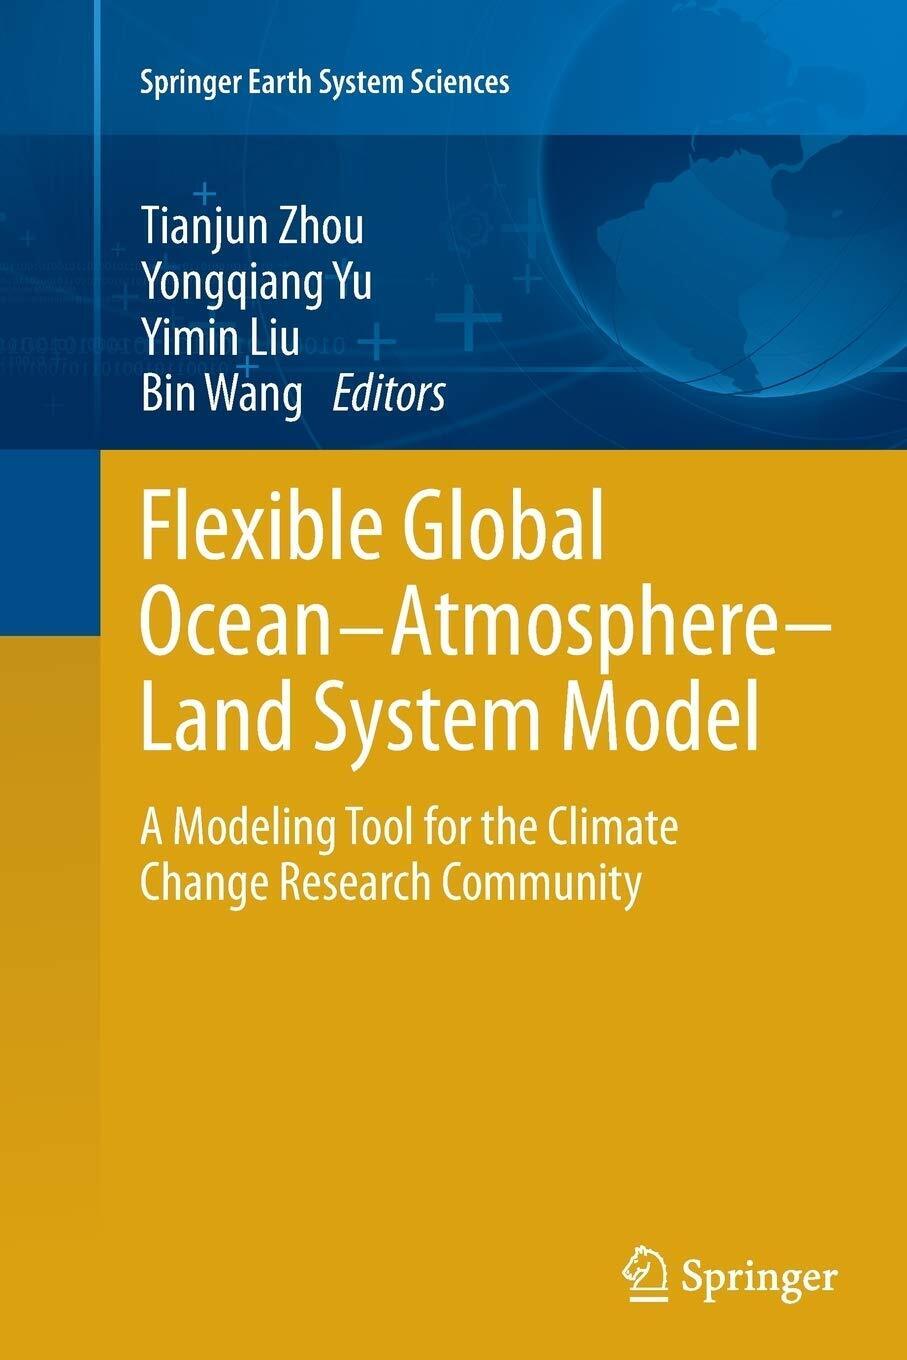 Flexible Global Ocean-Atmosphere-Land System Model - Tianjun Zhou -Springer,2016